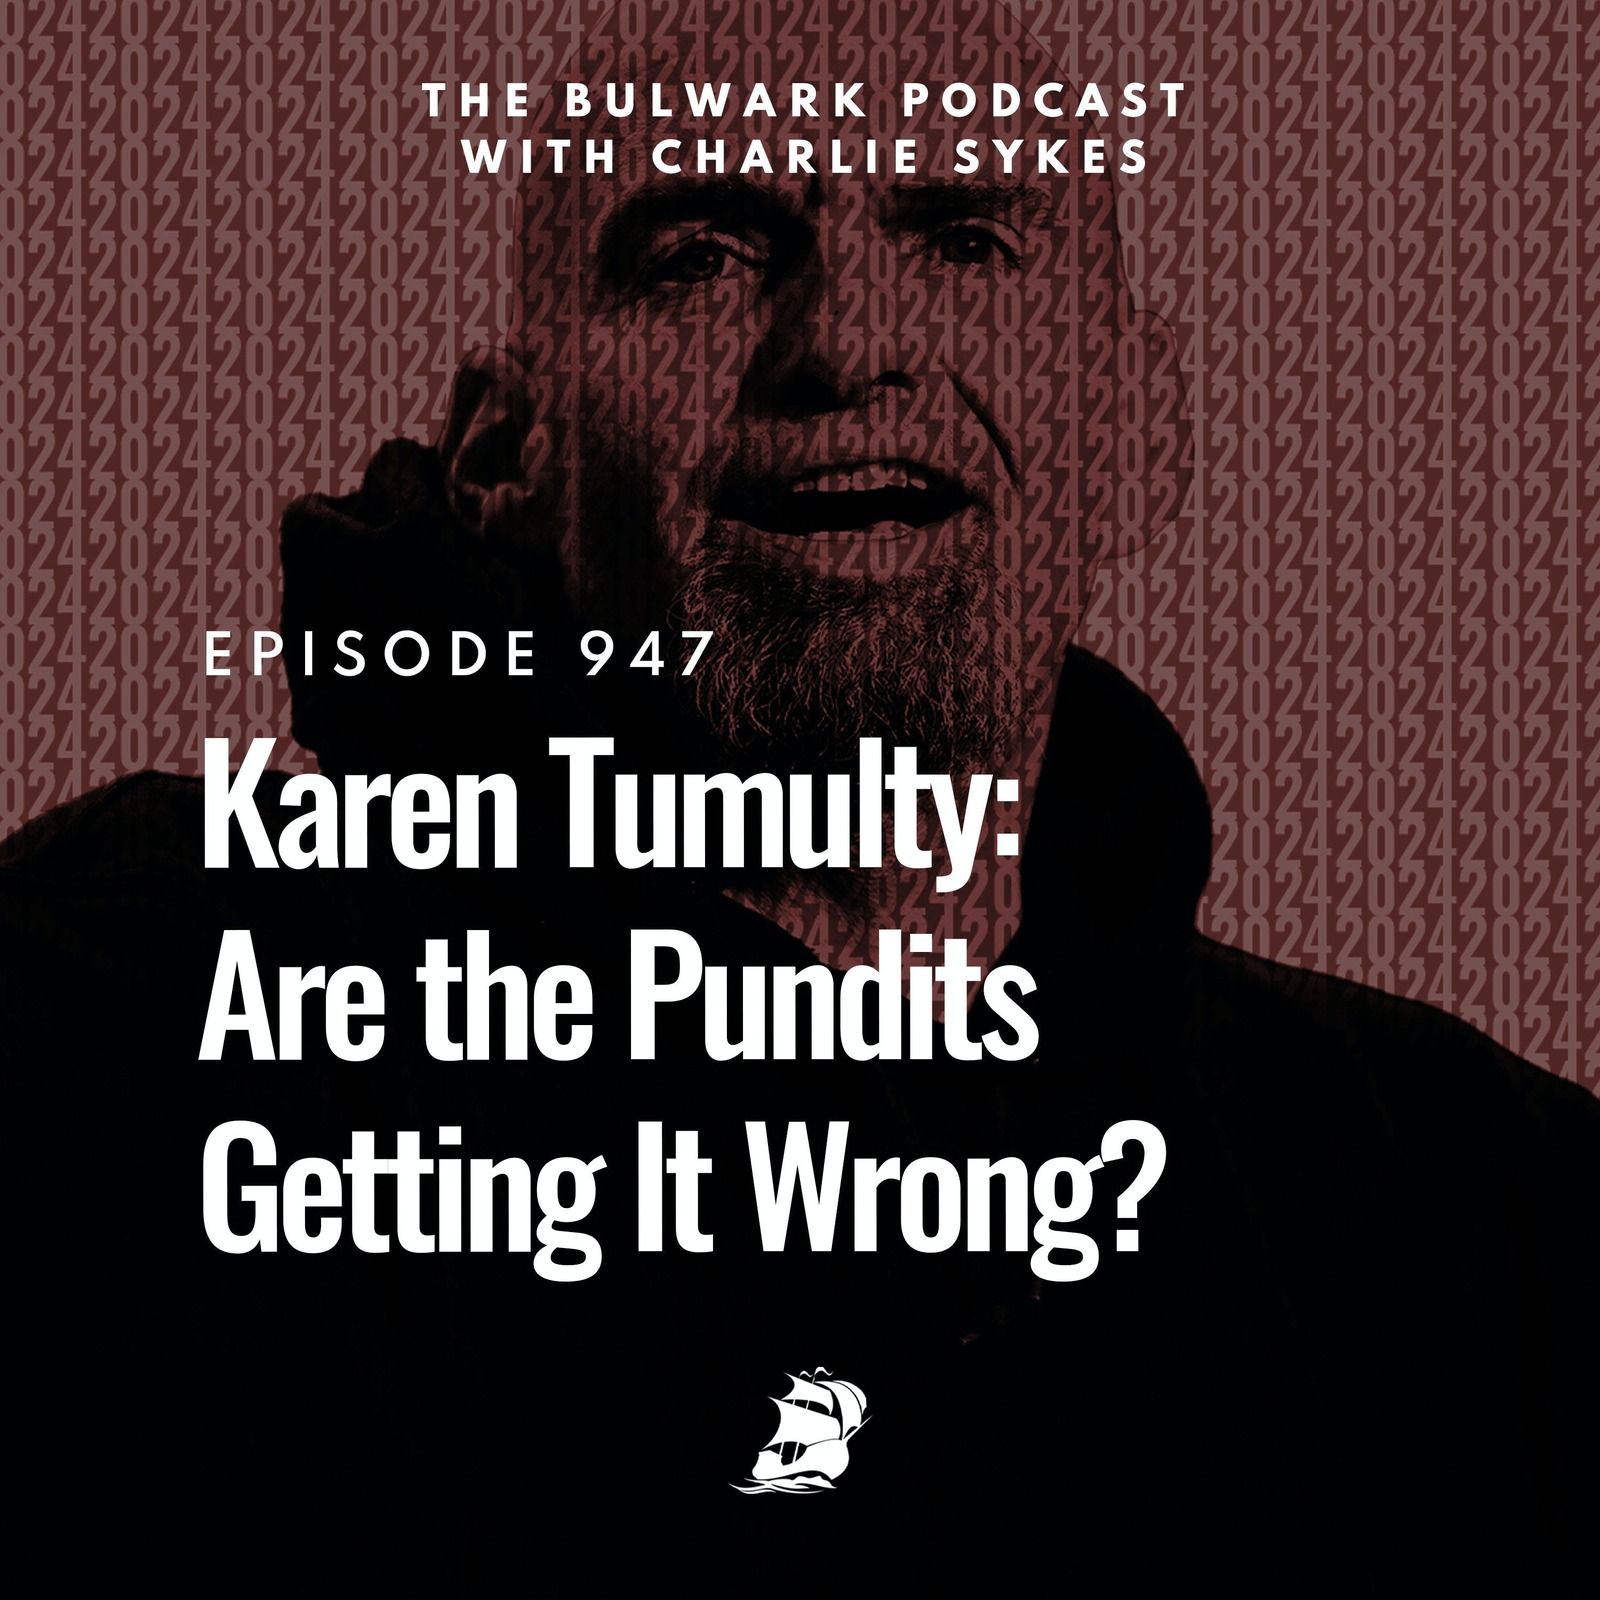 Karen Tumulty: Are the Pundits Getting It Wrong?